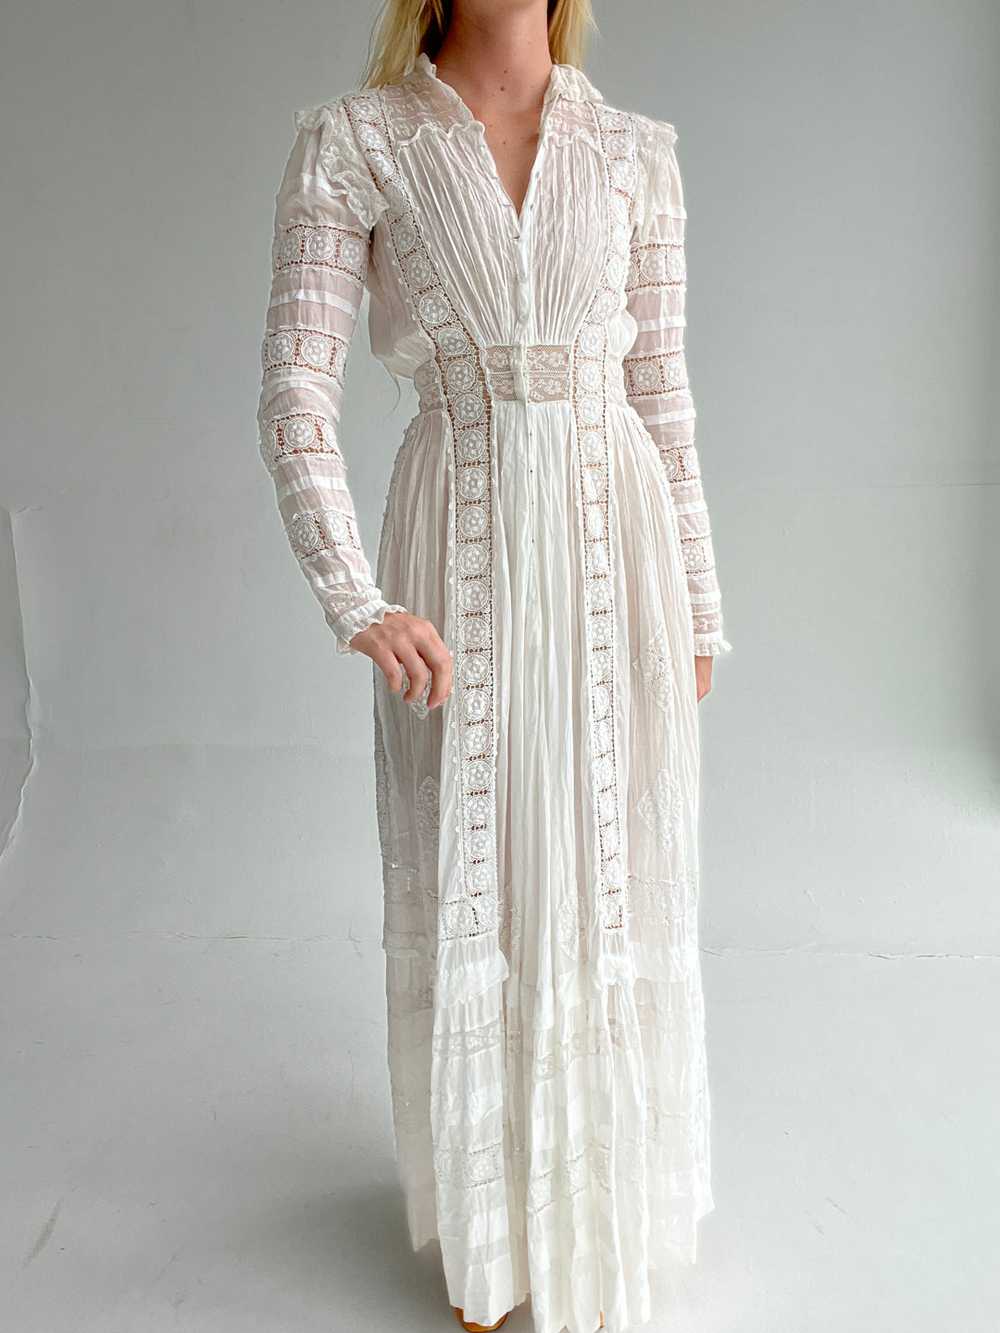 Edwardian White Cotton Long Sleeve Lawn Dress - image 4